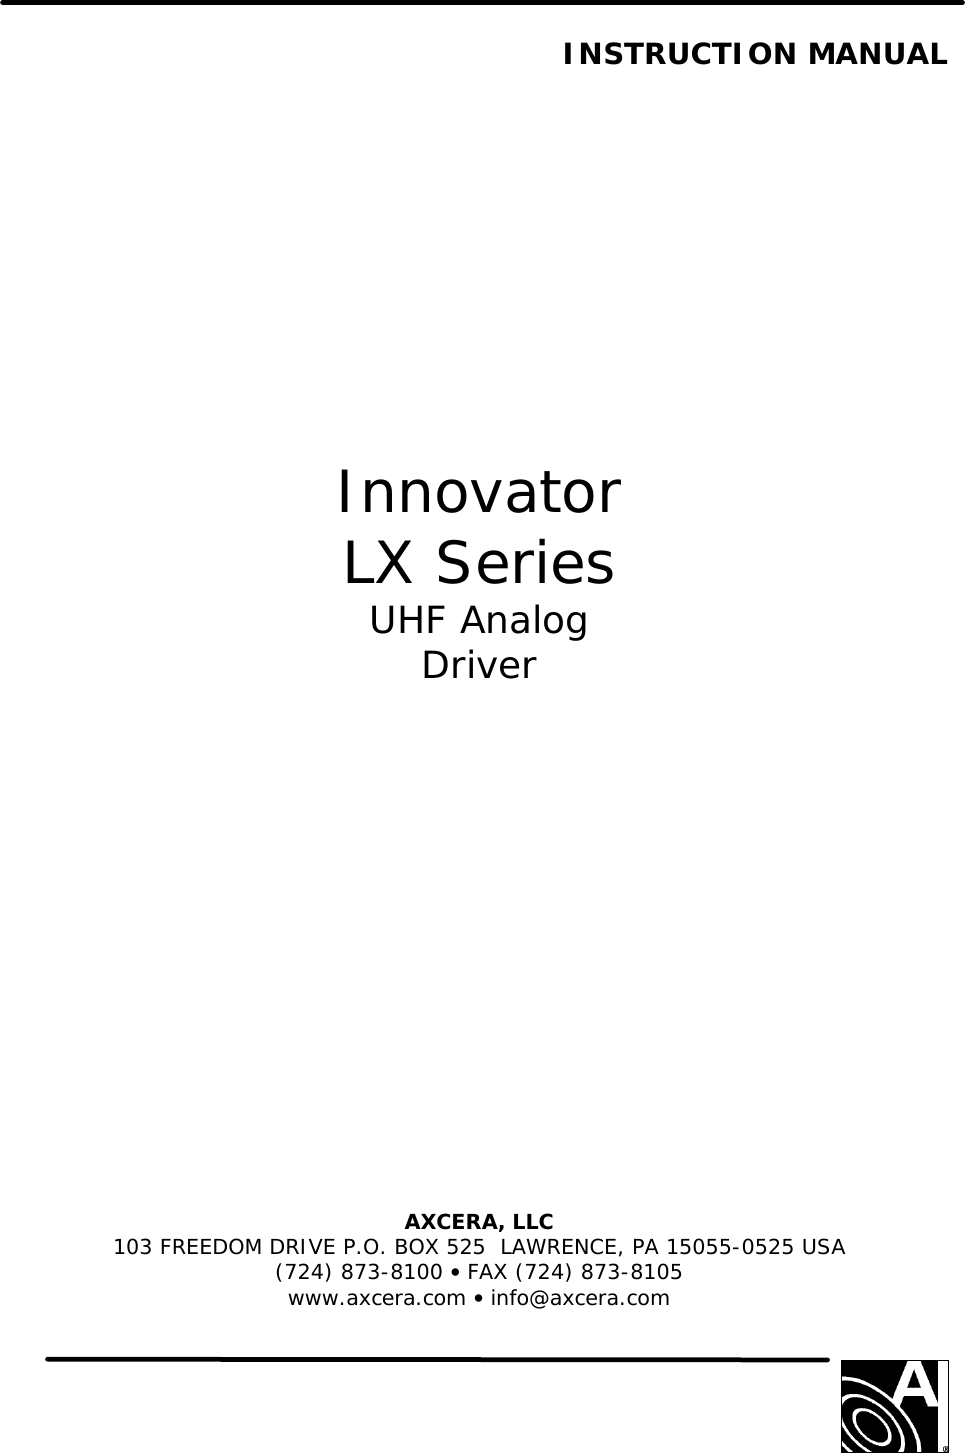   INSTRUCTION MANUAL                 Innovator LX Series UHF Analog Driver               AXCERA, LLC  103 FREEDOM DRIVE P.O. BOX 525  LAWRENCE, PA 15055-0525 USA (724) 873-8100 • FAX (724) 873-8105 www.axcera.com • info@axcera.com     